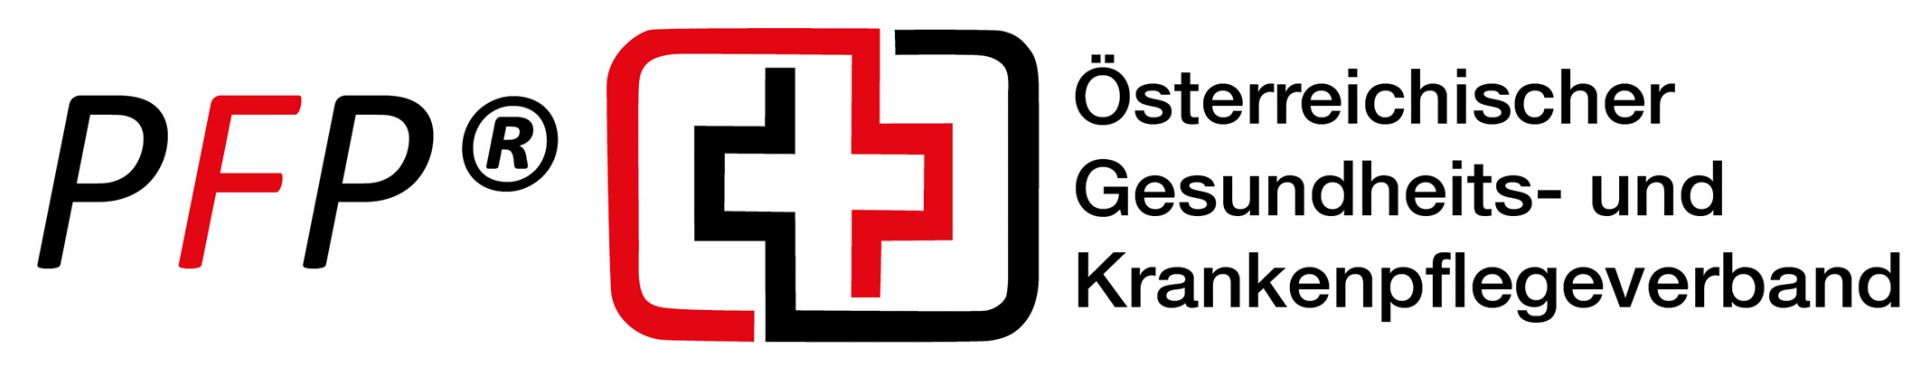 PFP-Logo_OEGKV-300dpi